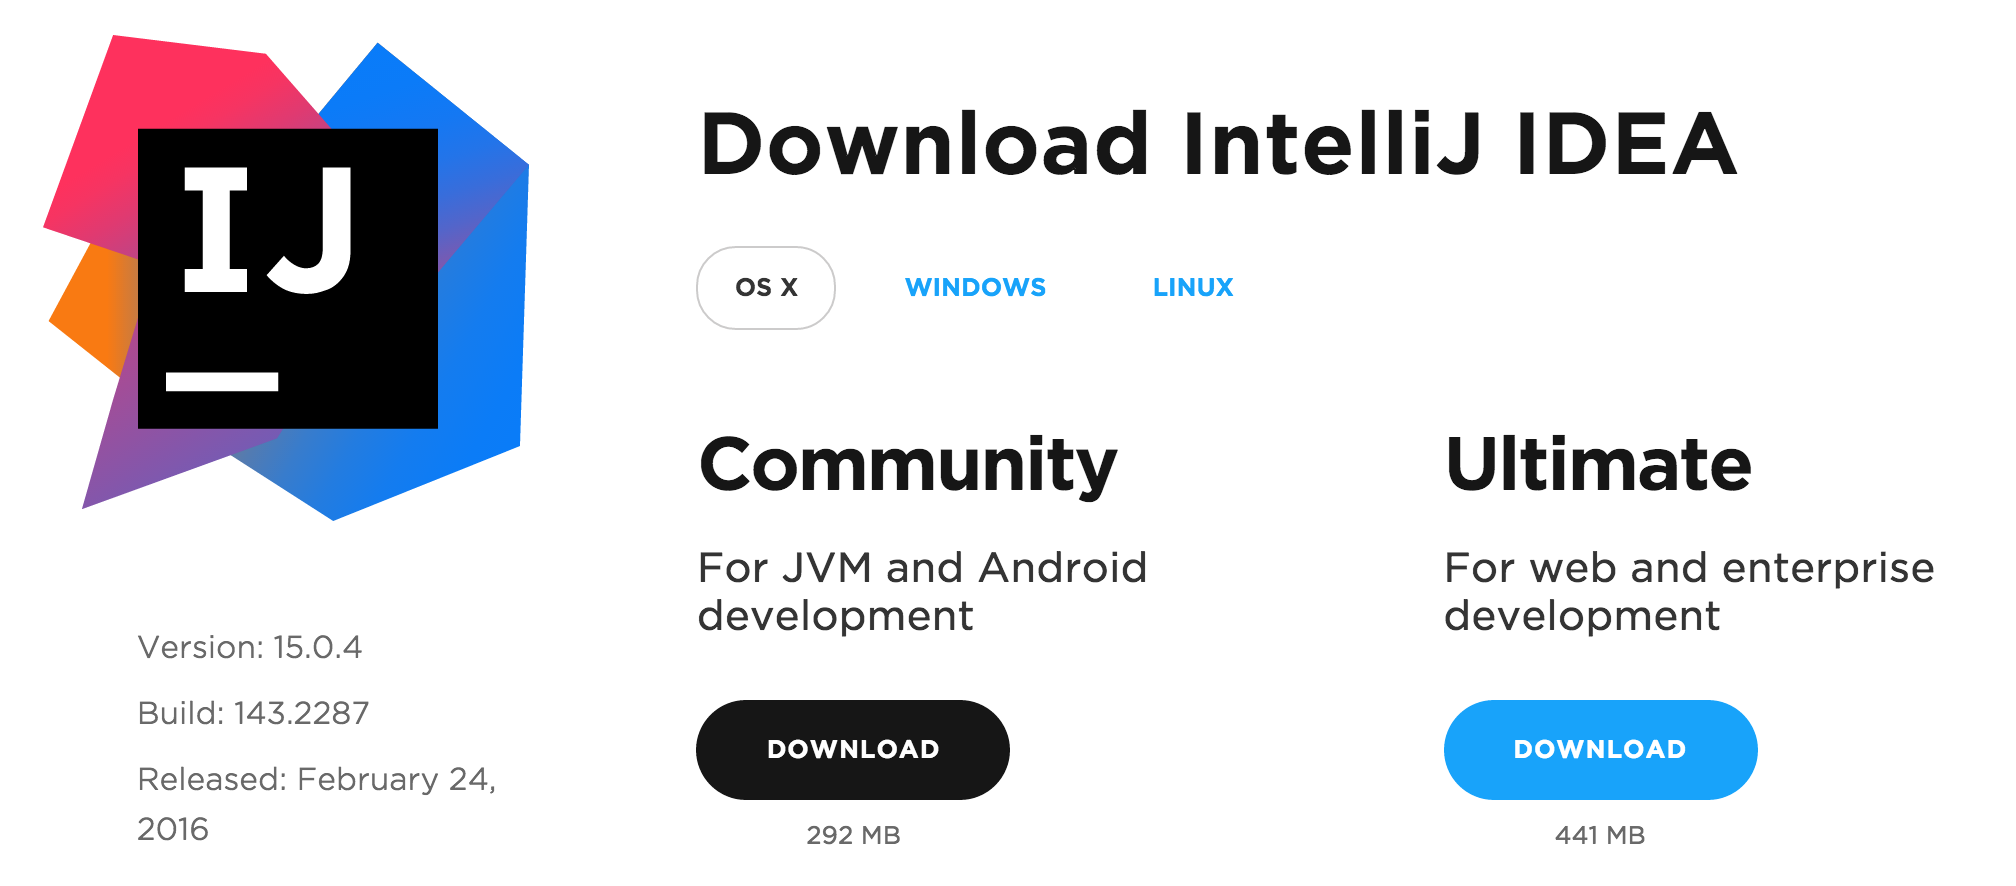 intellij idea ultimate download for windows